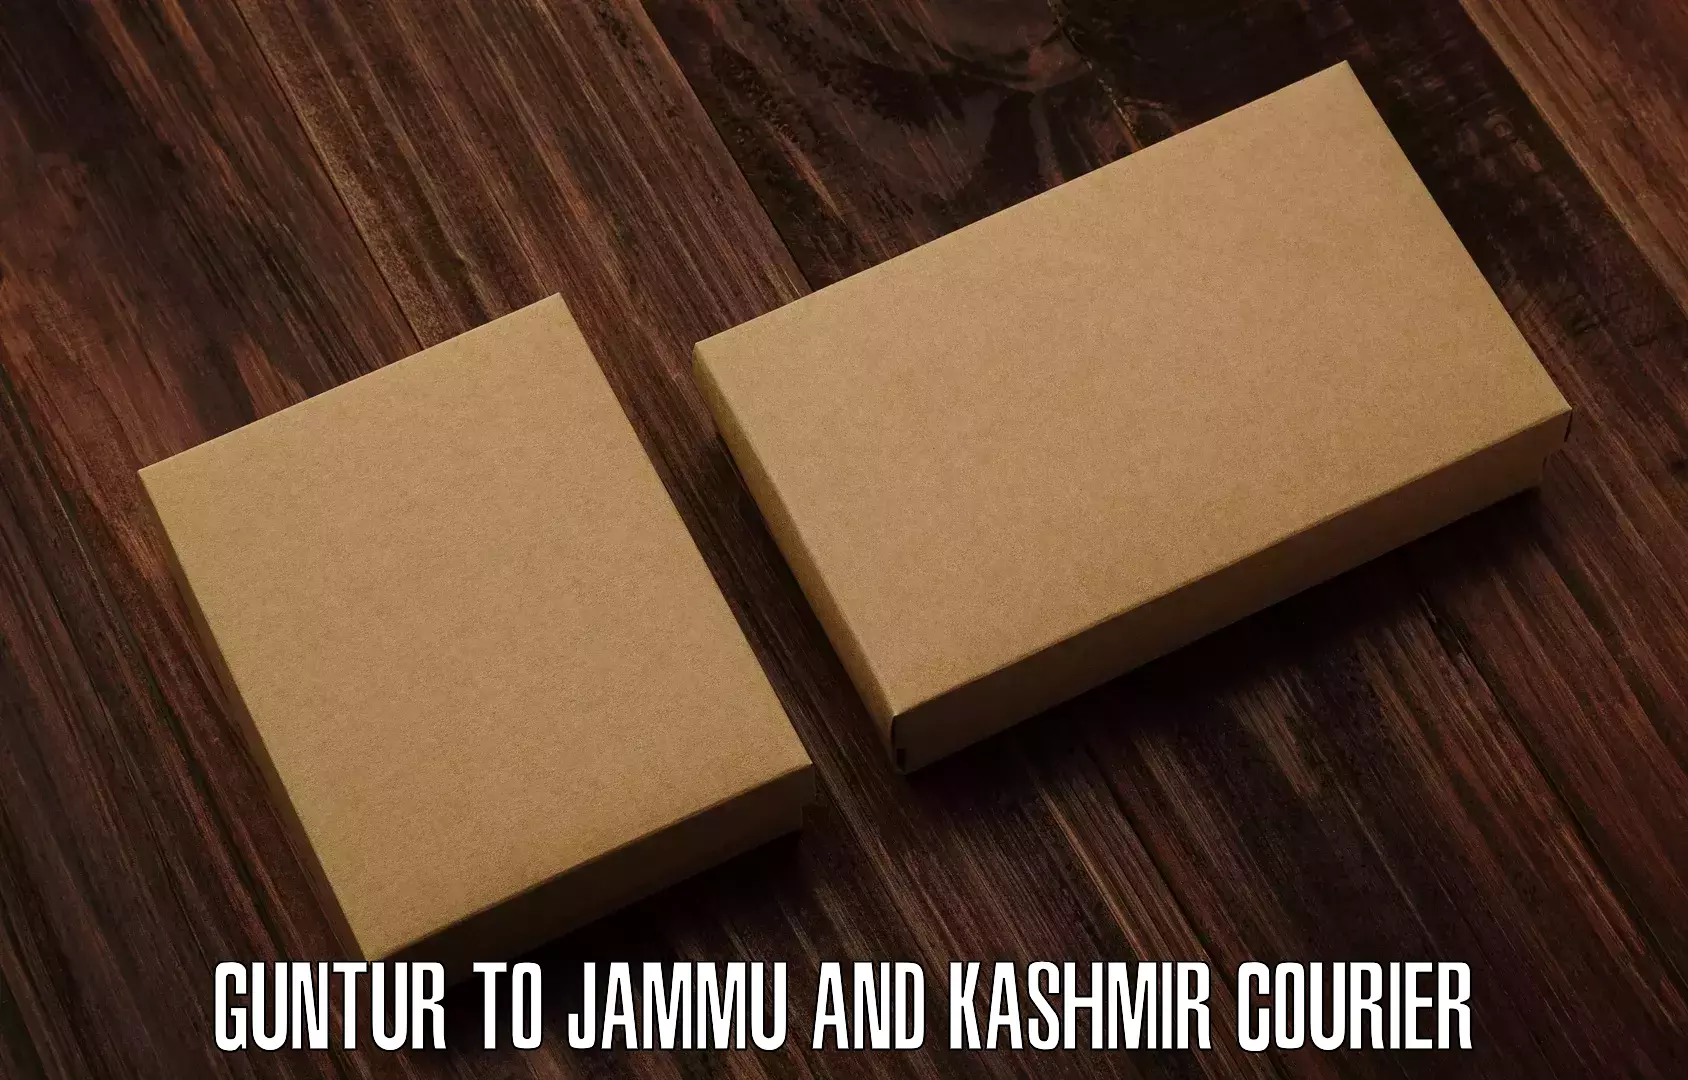 Courier service efficiency Guntur to Jammu and Kashmir